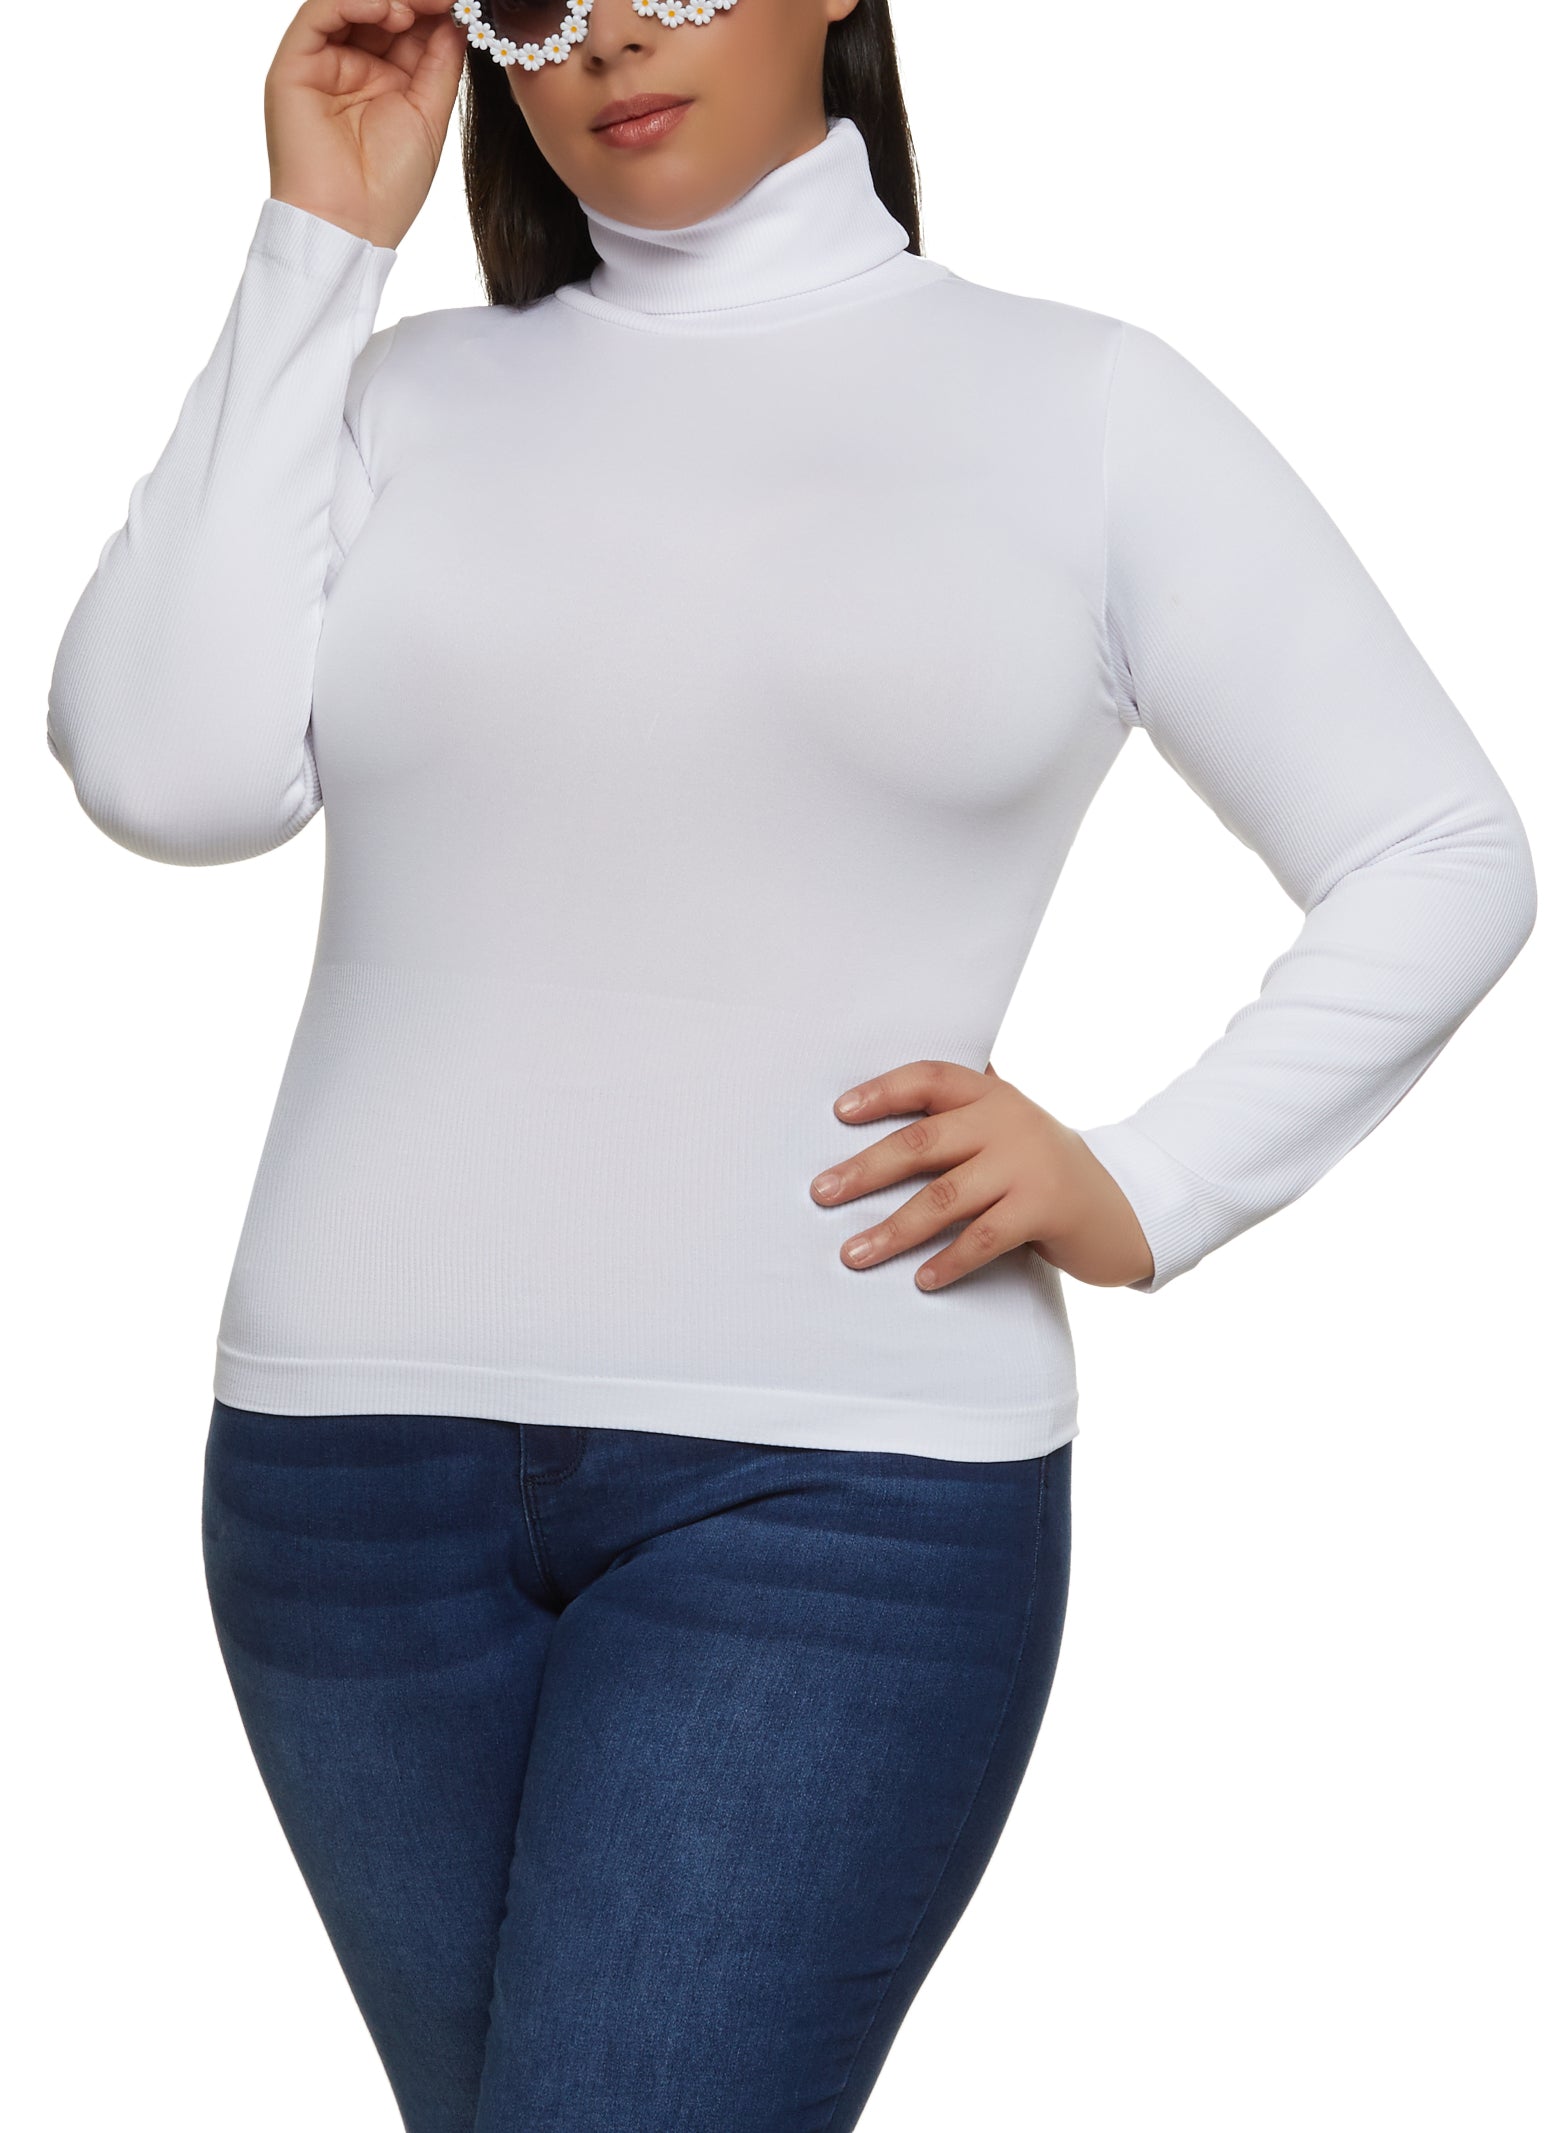 Womens Plus Size Basic Long Sleeve Turtleneck Top, White, Size 2X-3X